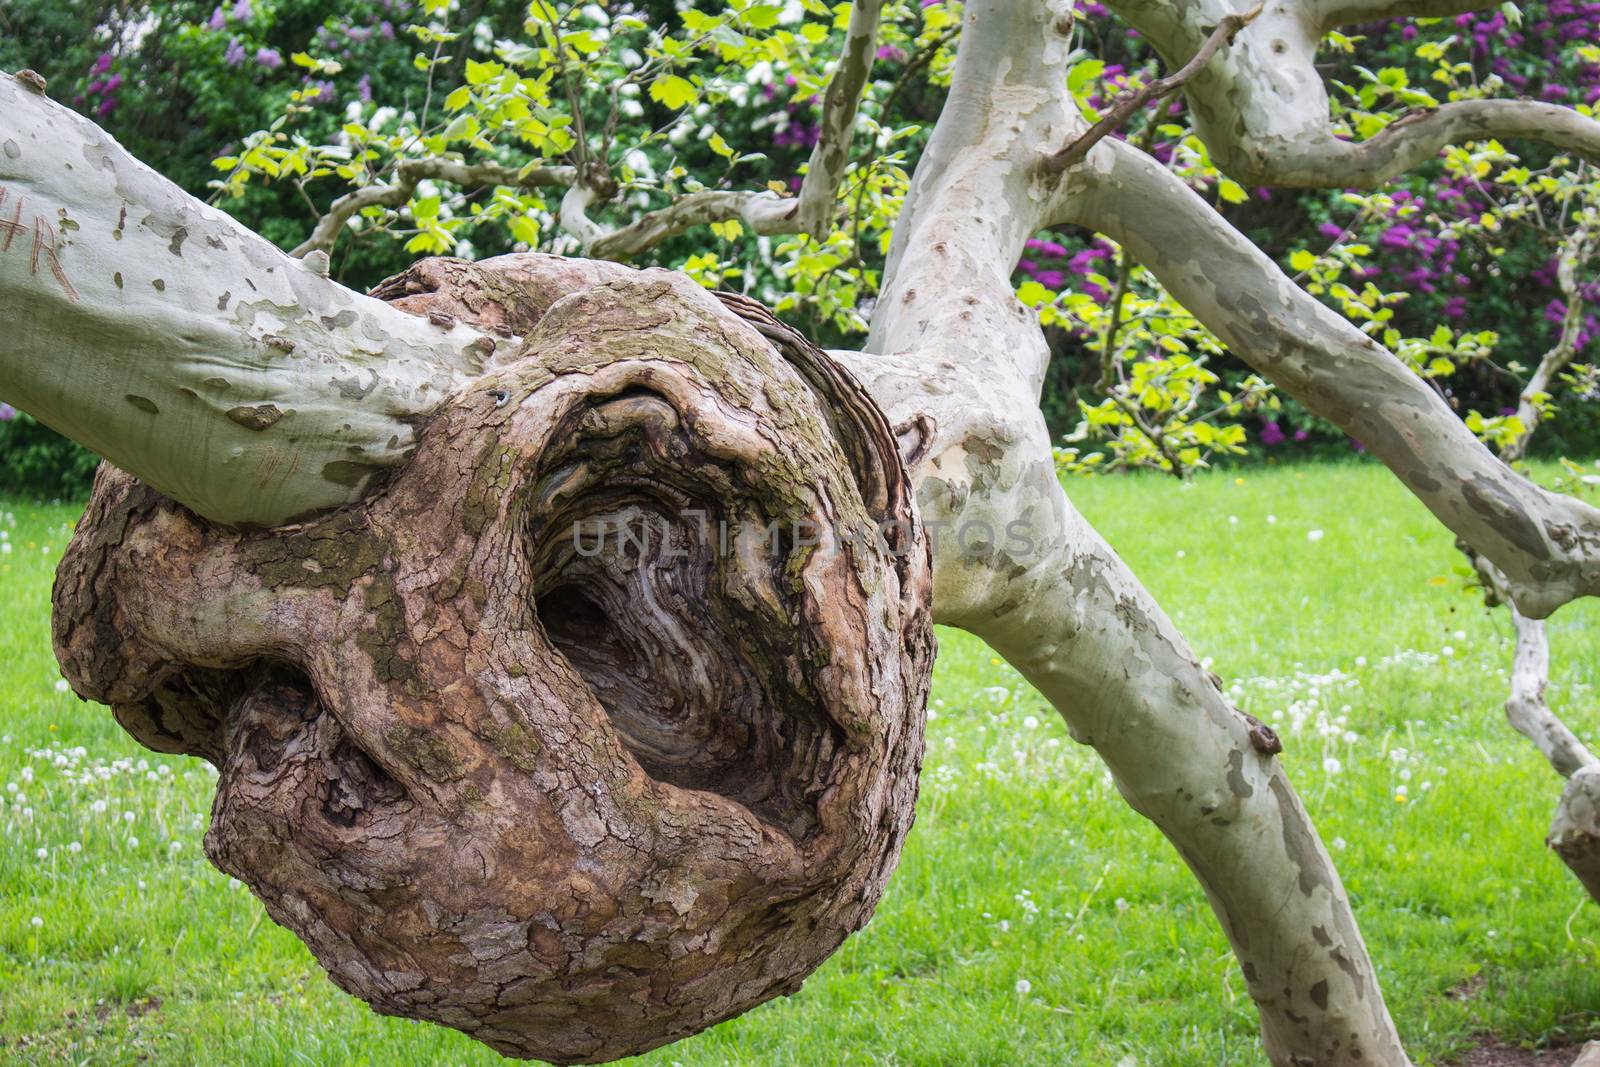 Burl on a tree,Freak of nature